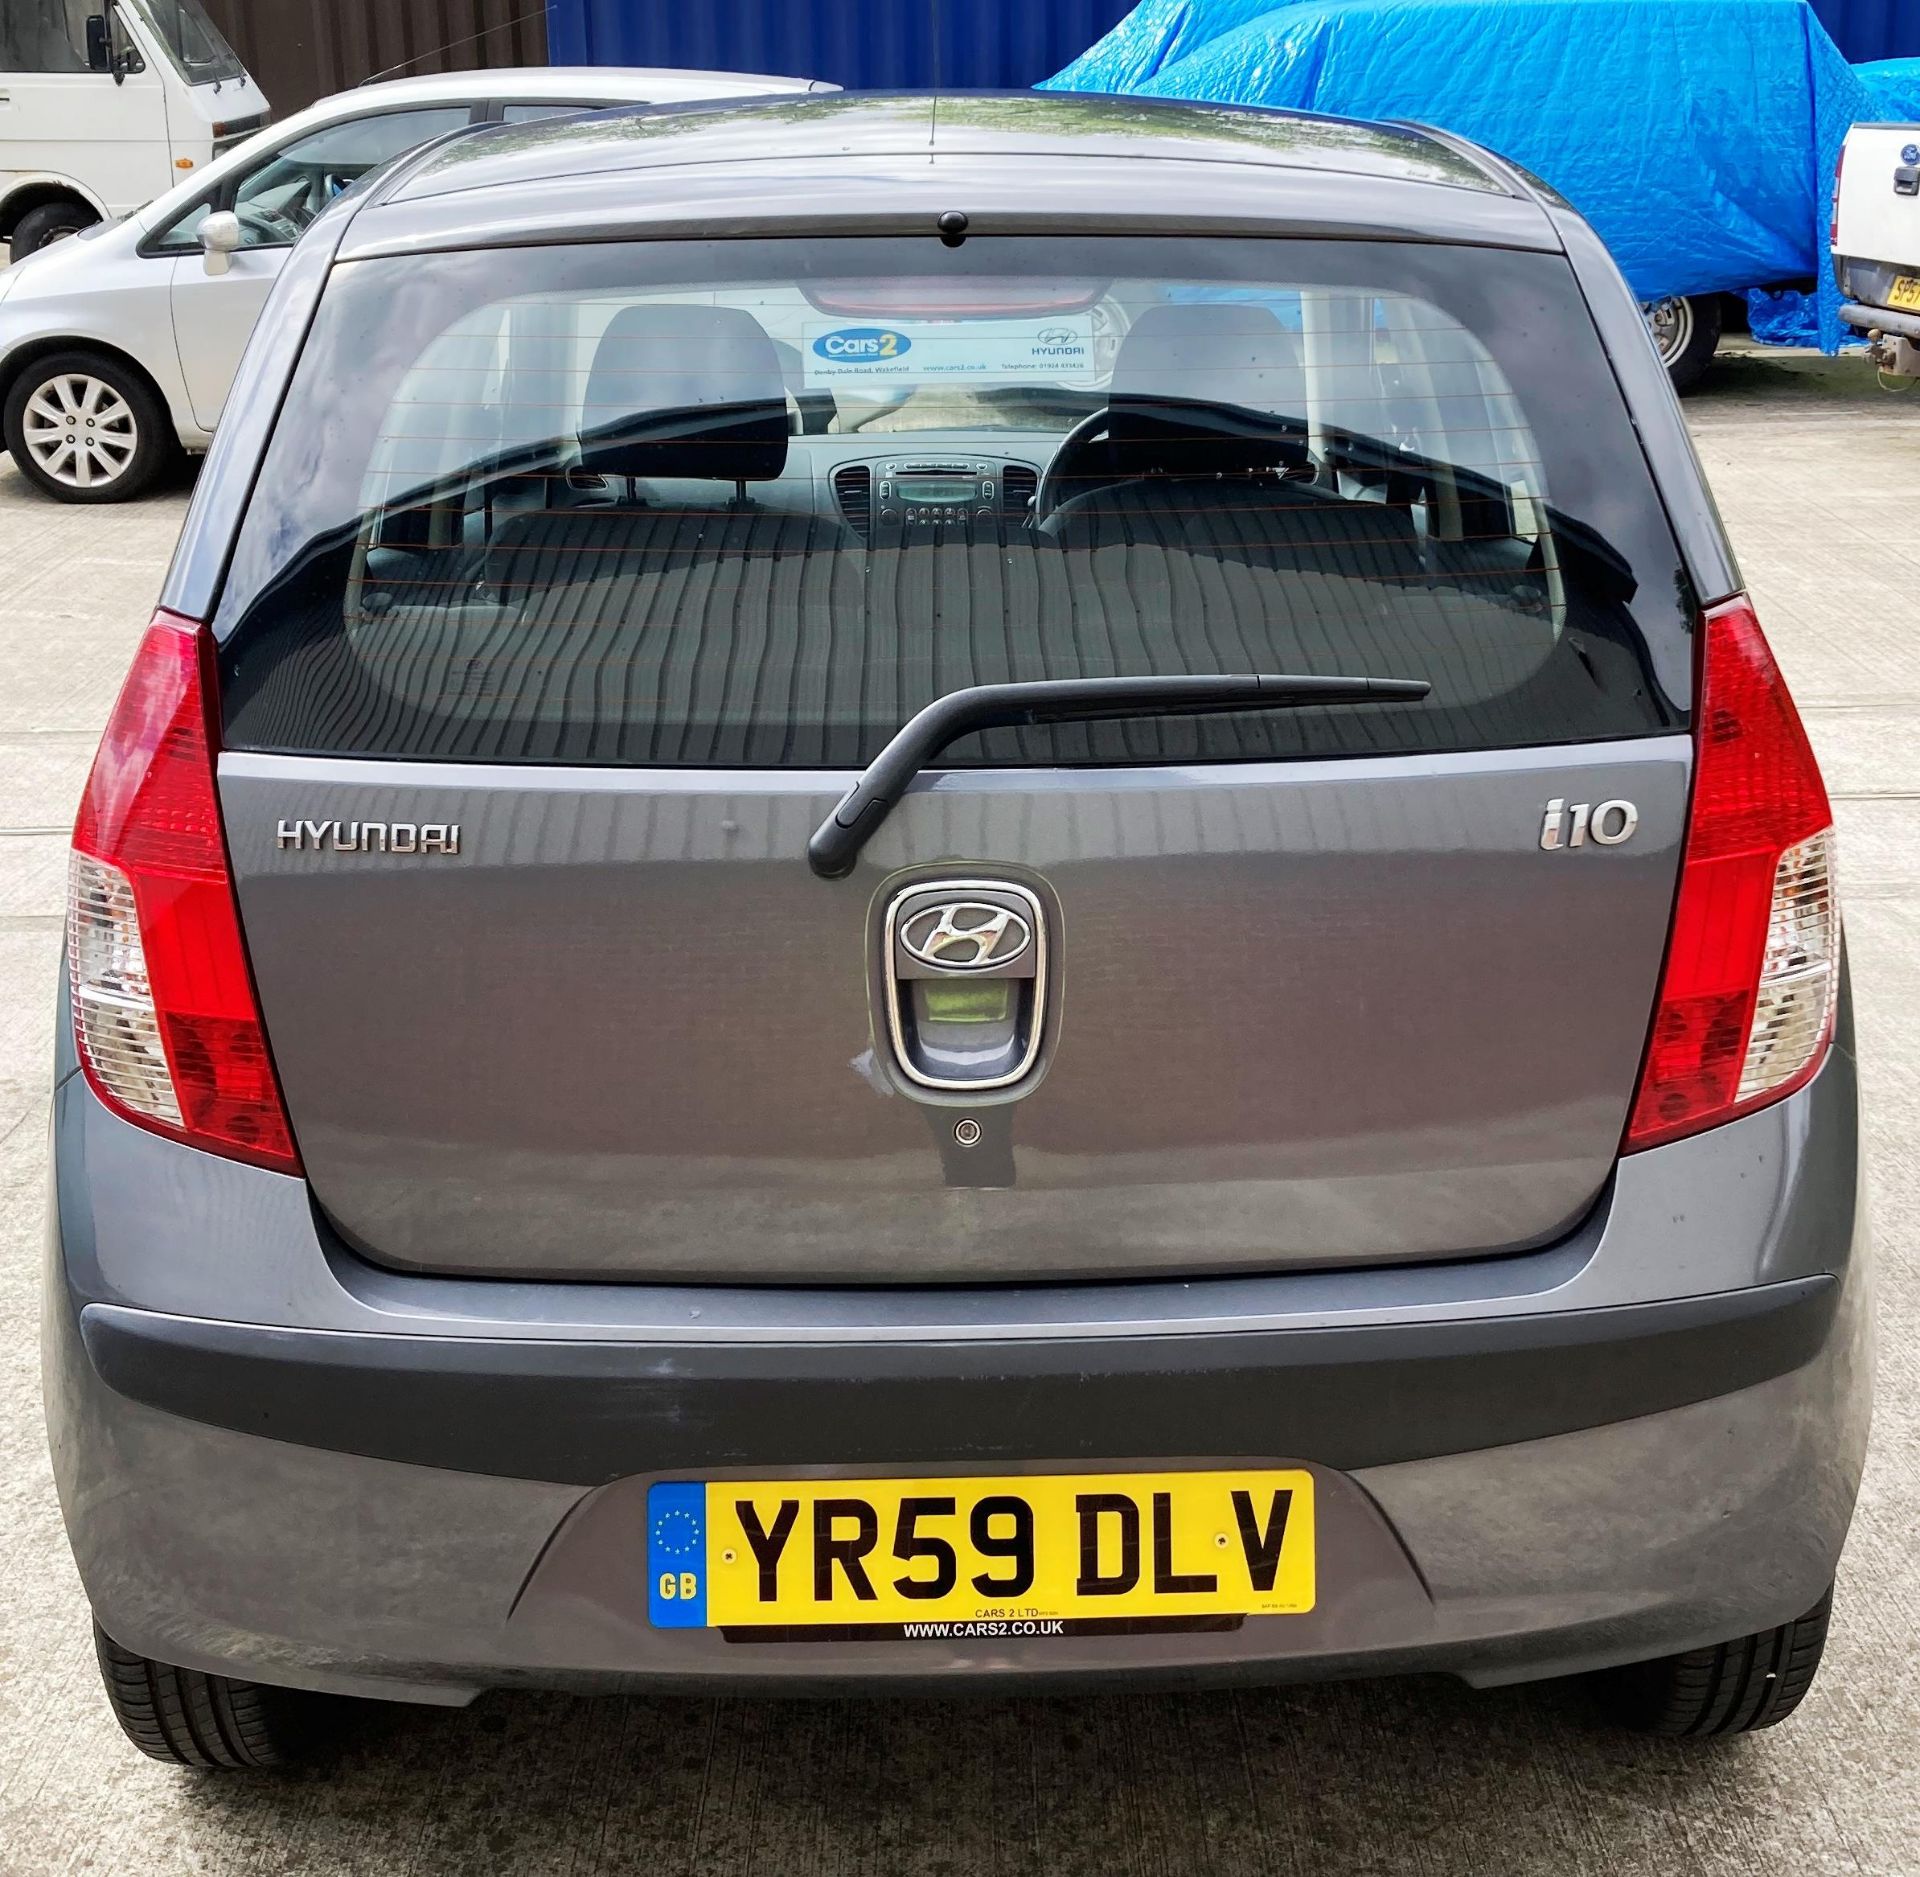 FROM A DECEASED ESTATE HYUNDAI i10 CLASSIC 5 door hatchback (1248cc) - petrol - grey Reg No: YR59 - Image 4 of 8